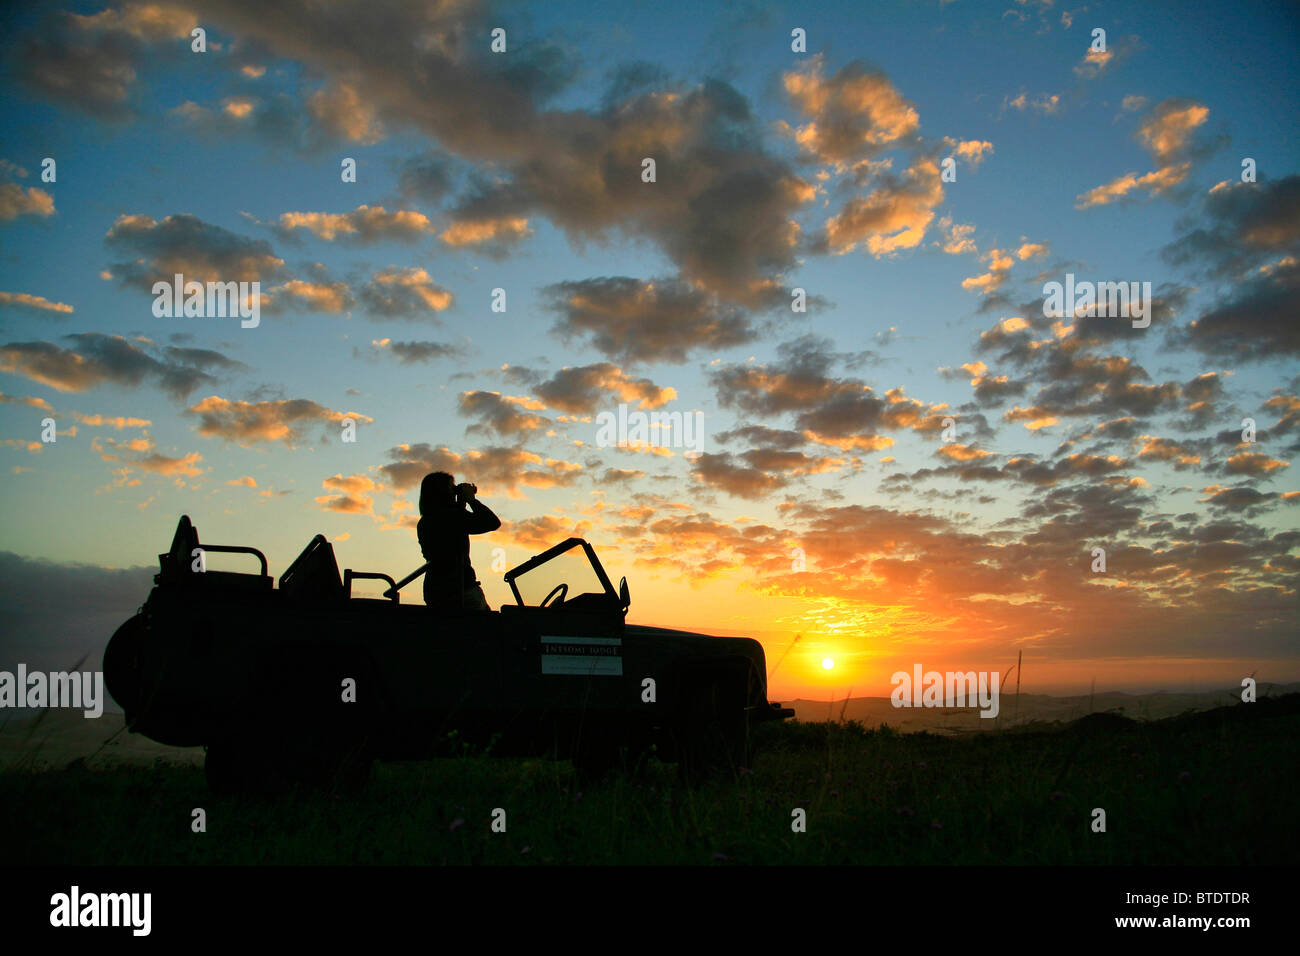 Ranger standing up in an open topped safari vehicle looking through binoculars at sunset Stock Photo